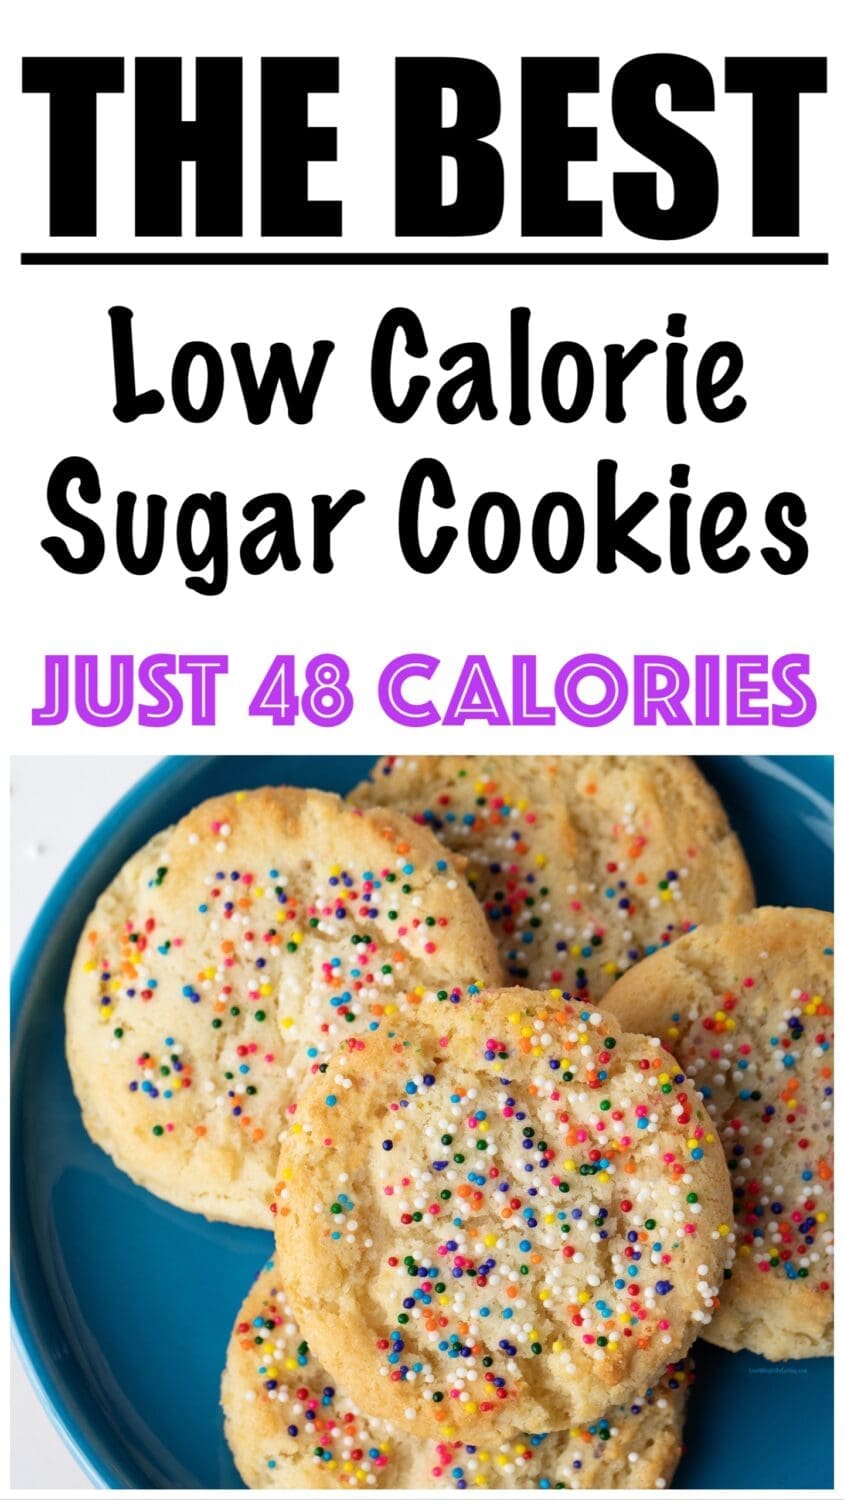 Low Calorie Sugar Cookies